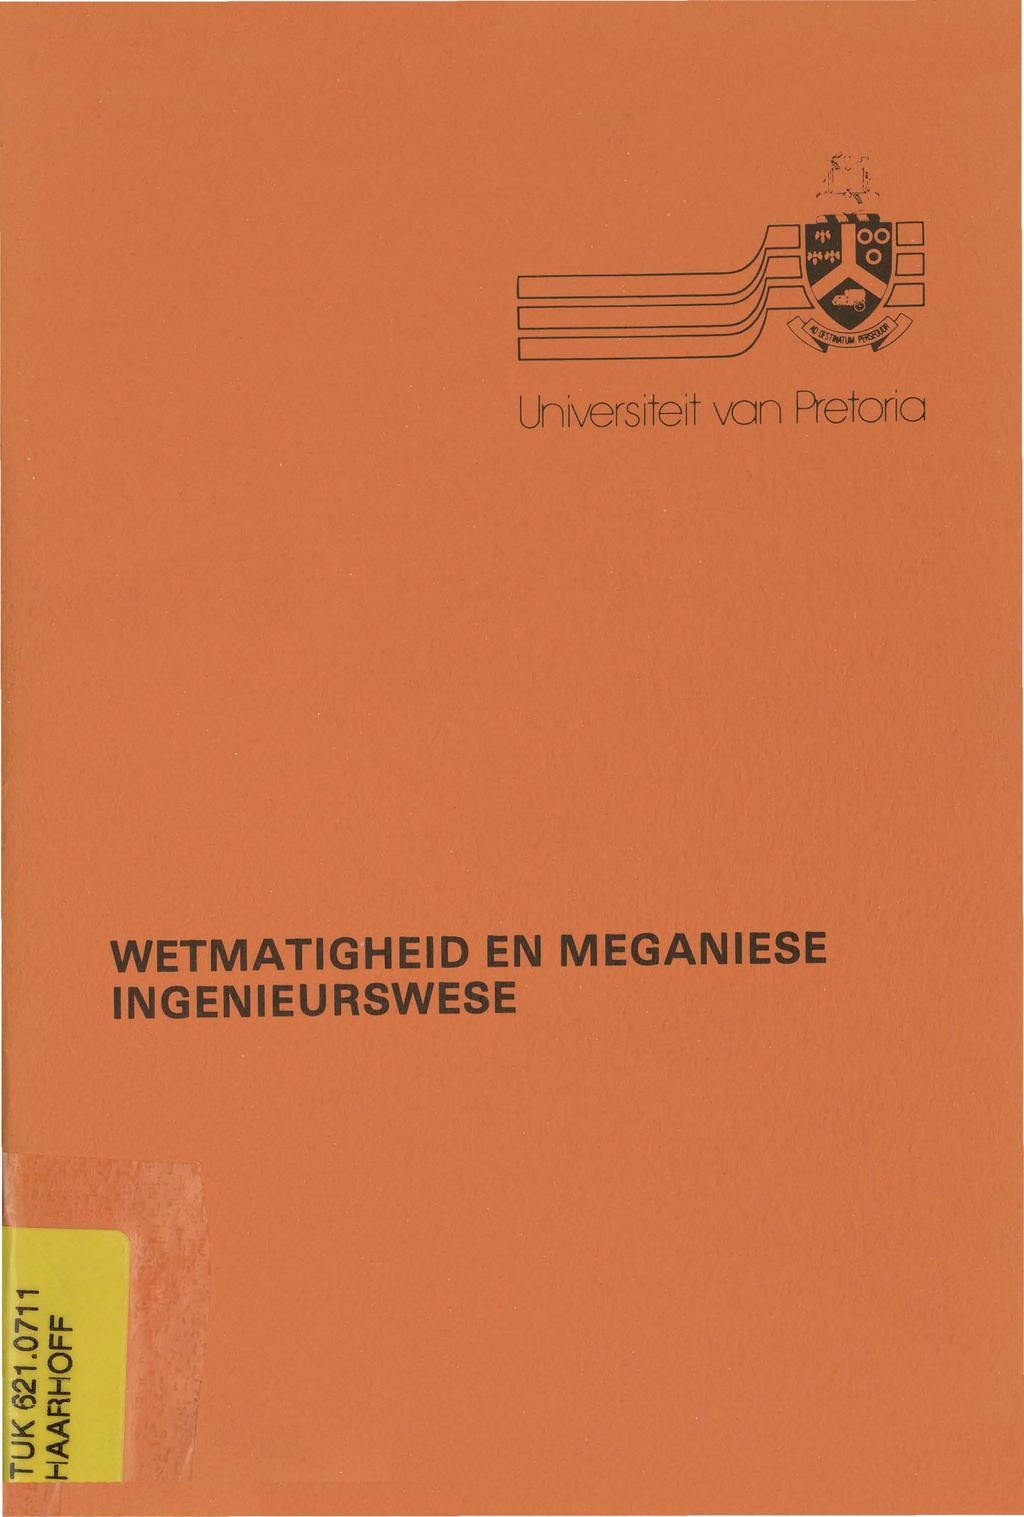 ~====~~E :J~ Universiteit van Pretoria WETMATIGHEID EN